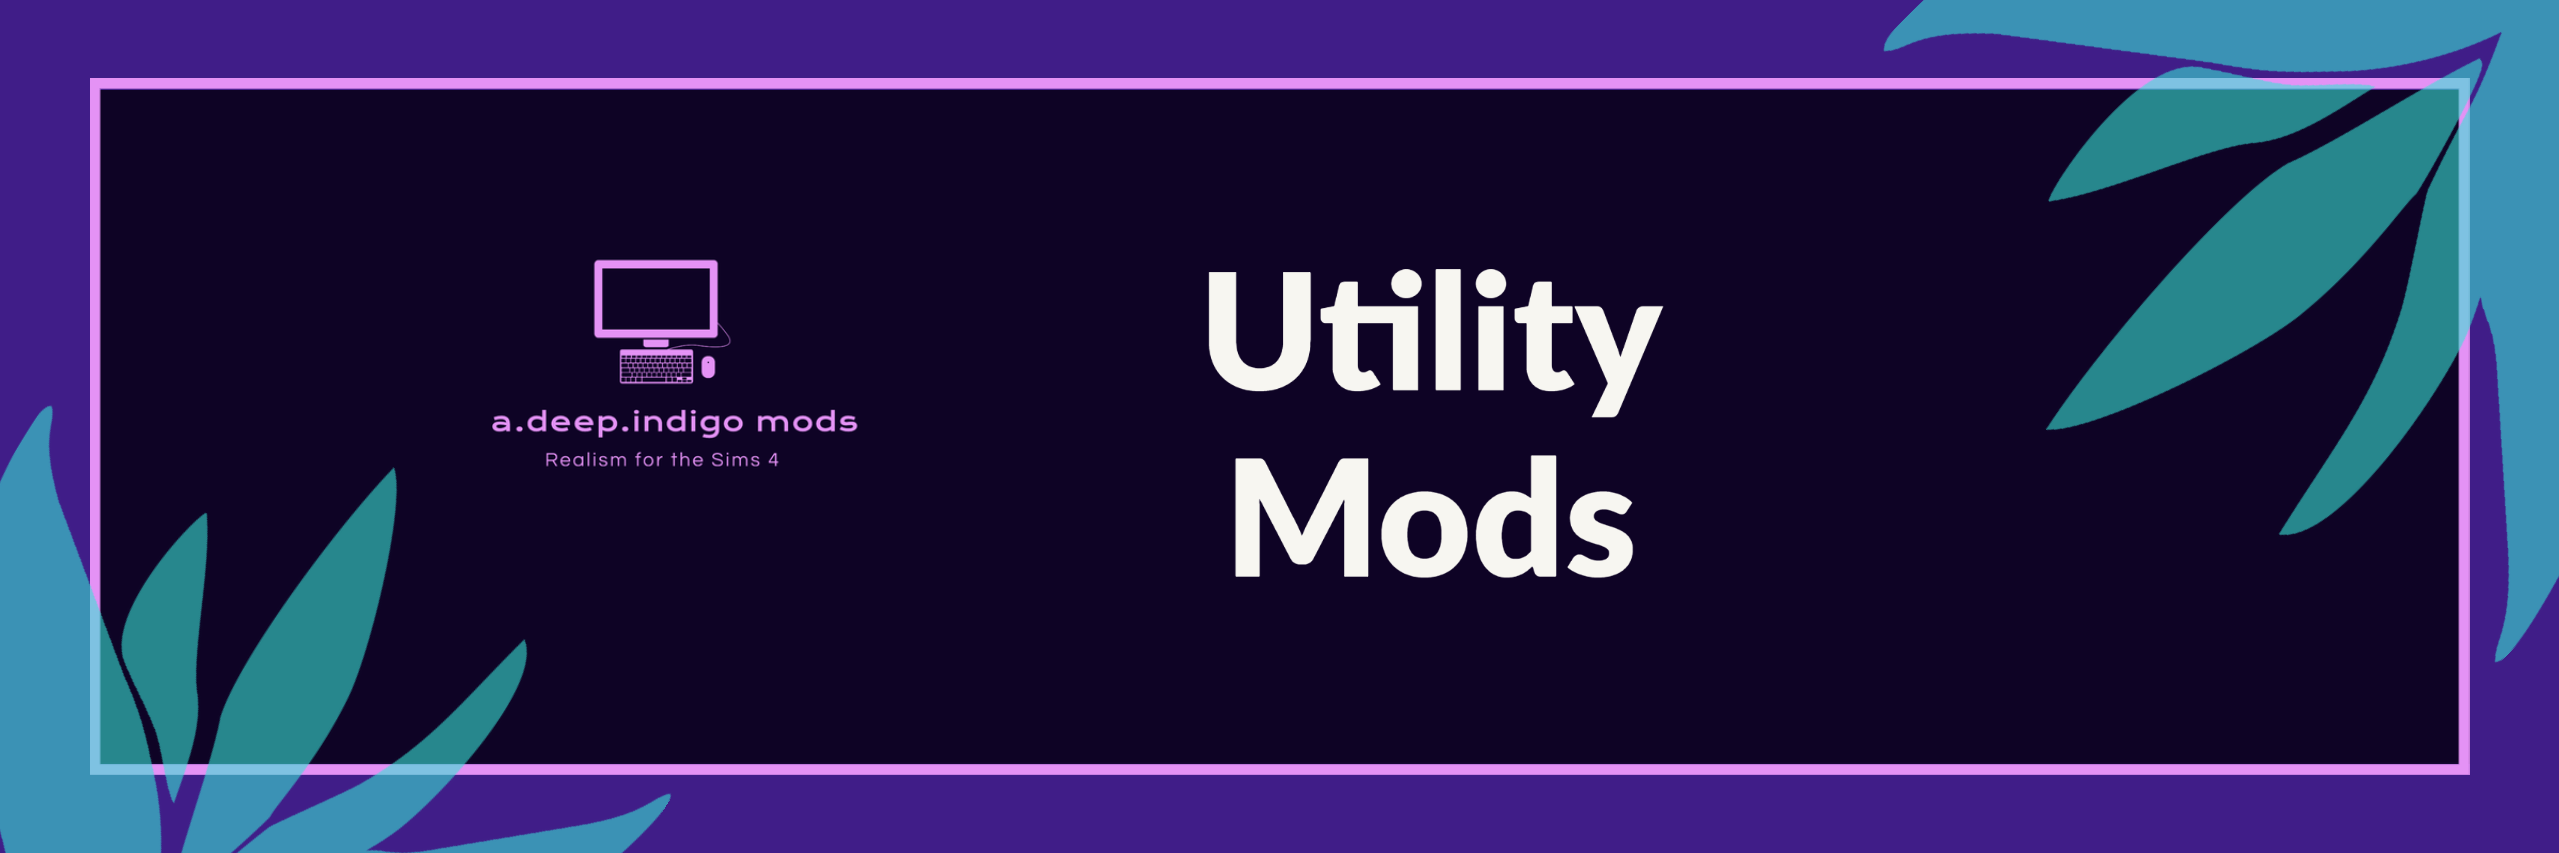 Utility Mods